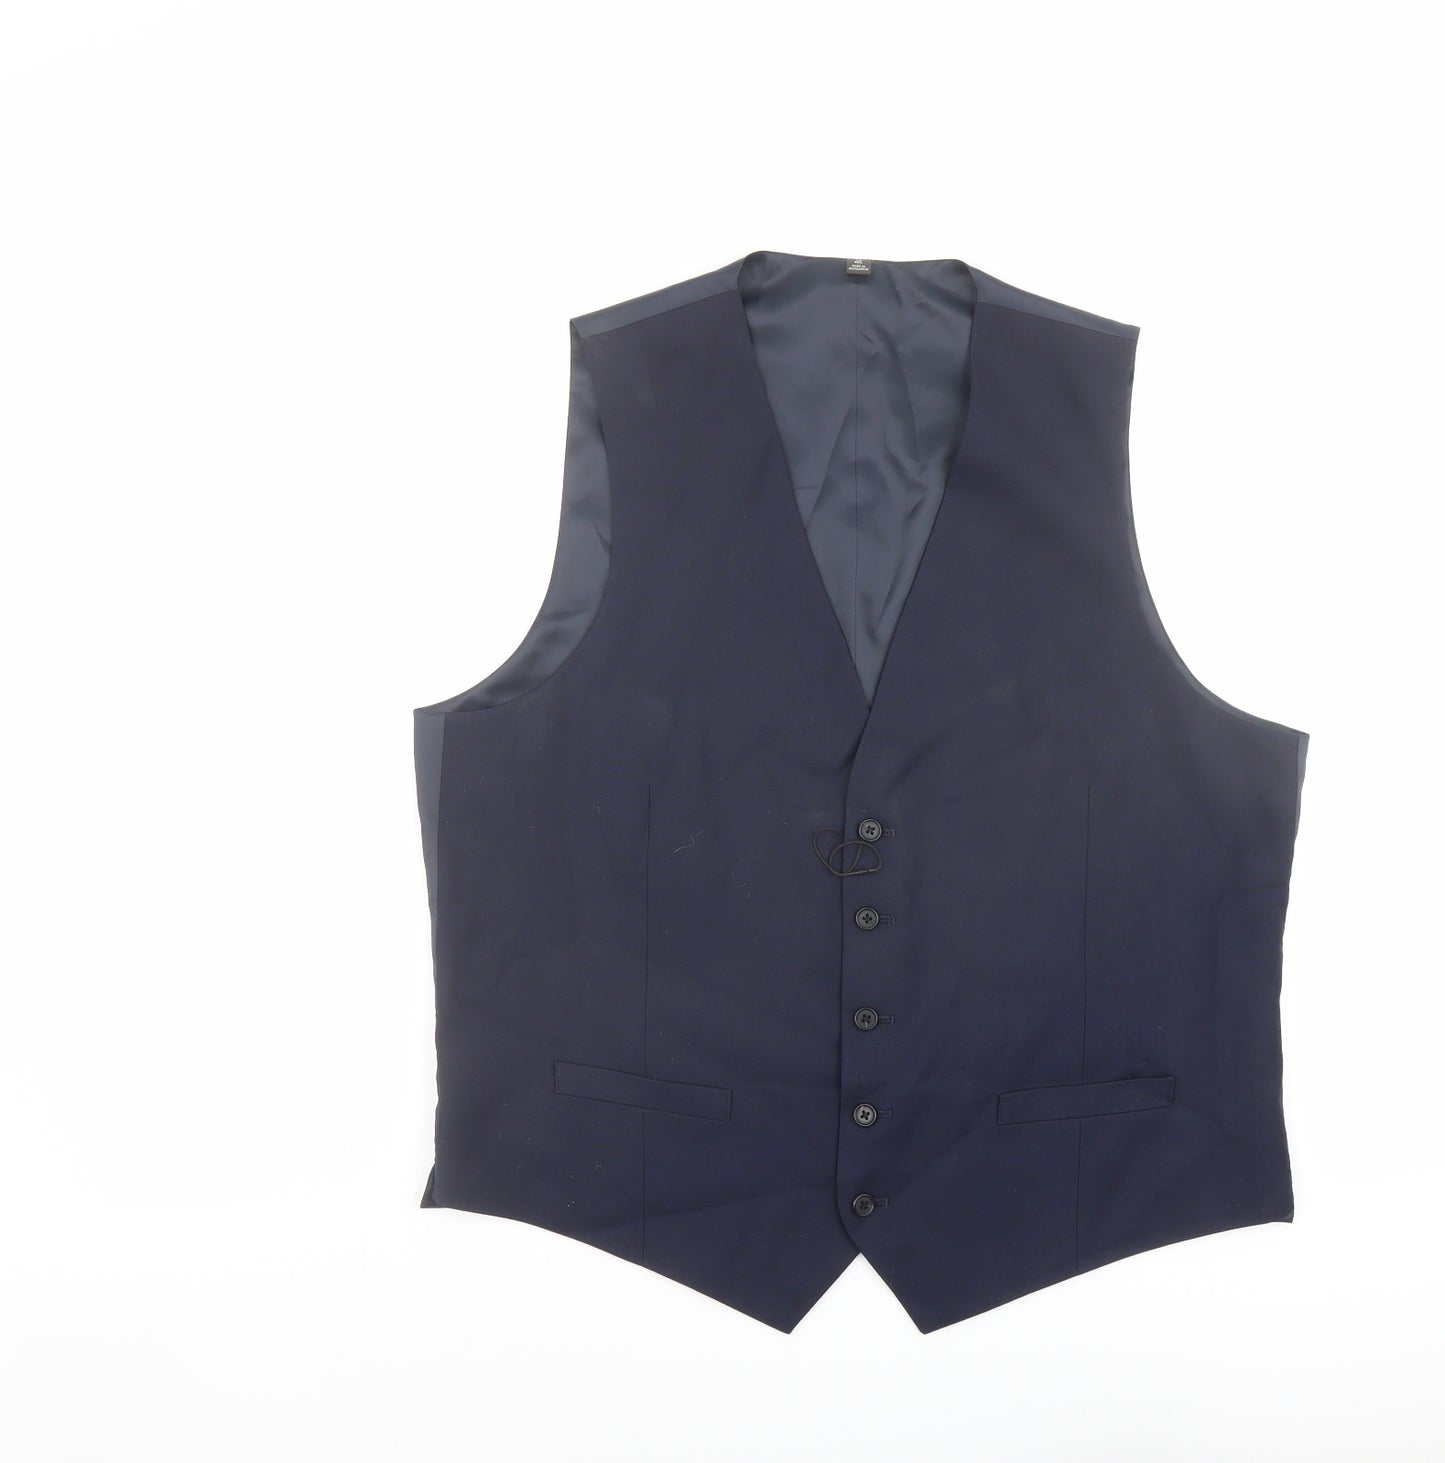 Marks and Spencer Mens Blue Polyester Jacket Suit Waistcoat Size 44 Regular